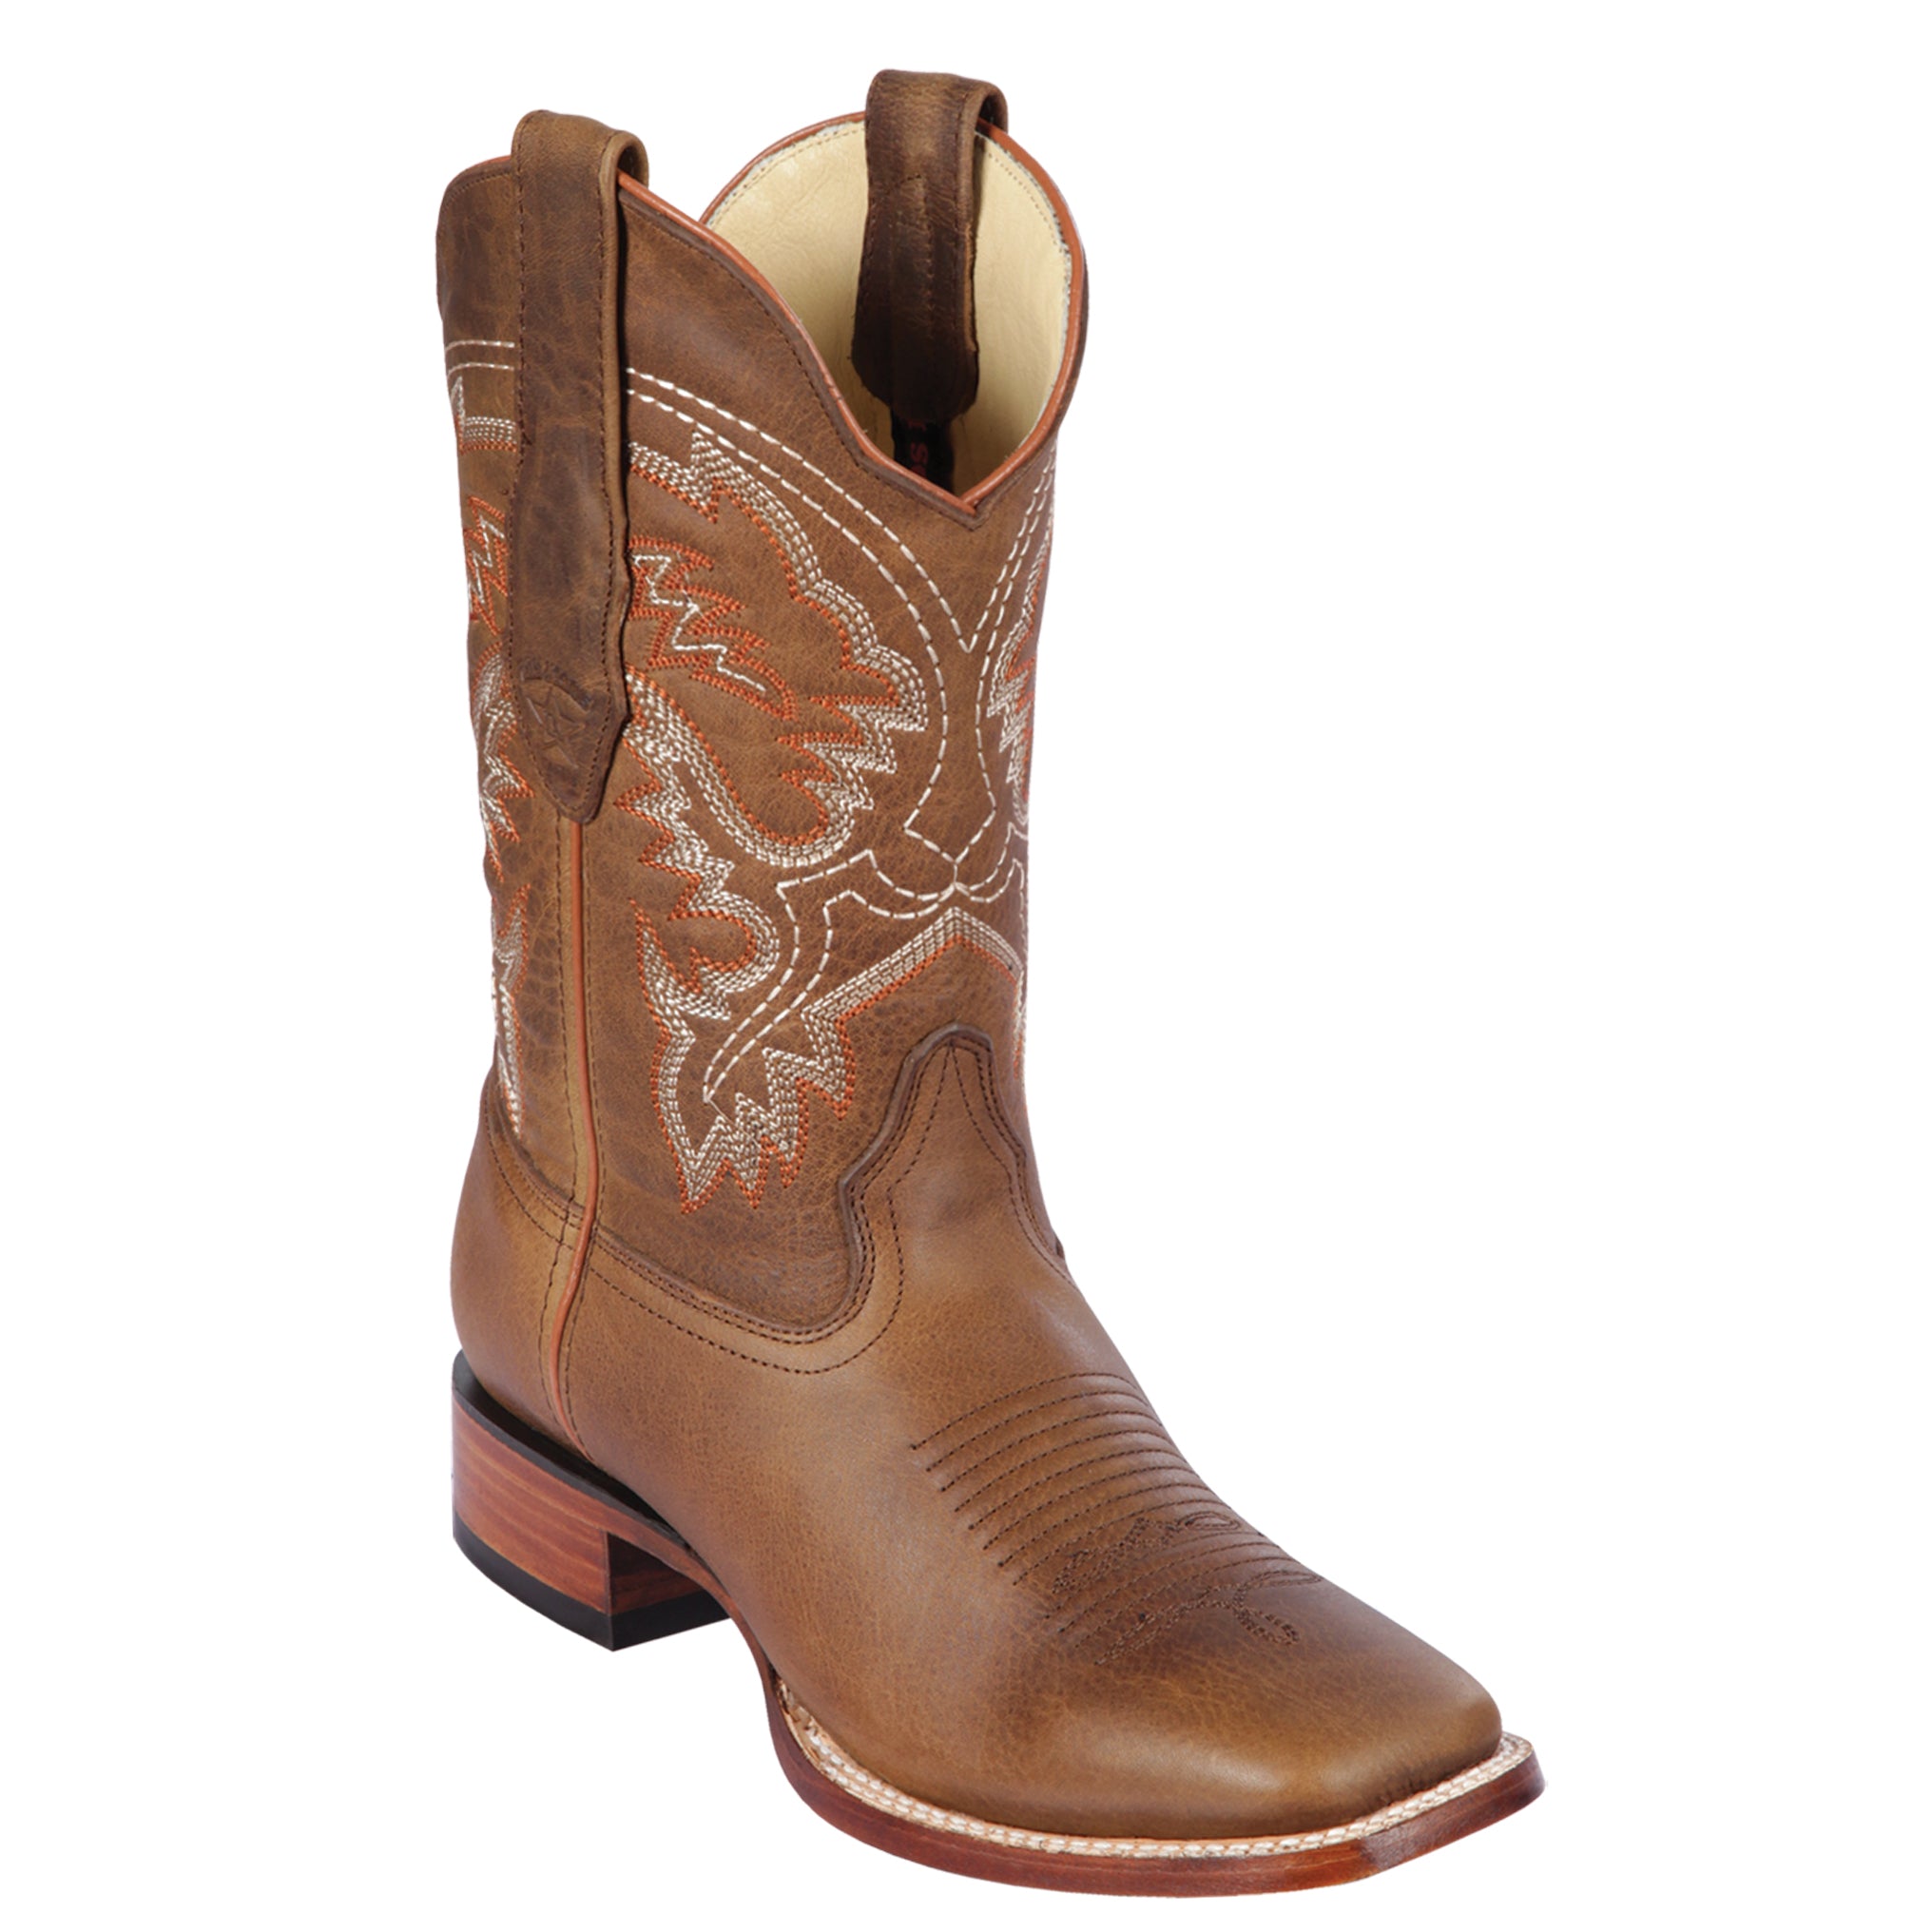 Men's Western Boots/botas Vaqueras De Hombre 